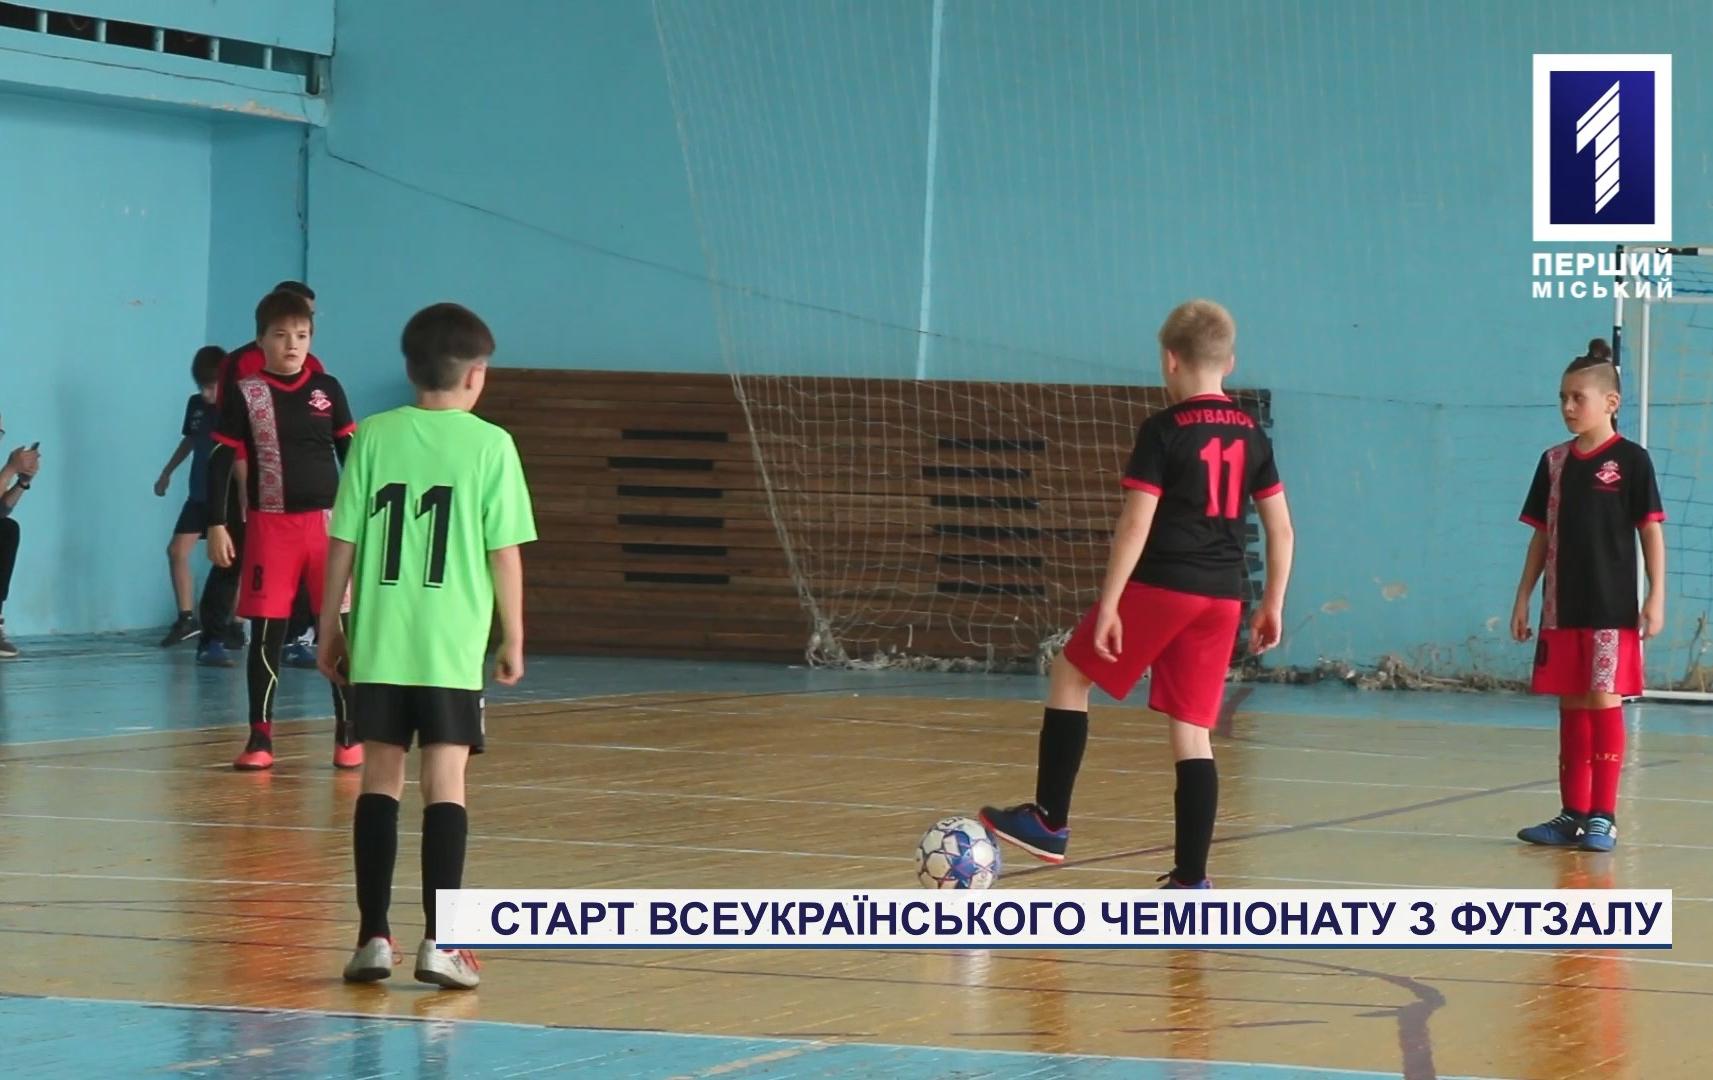 Старт всеукраинского чемпионата по футзалу